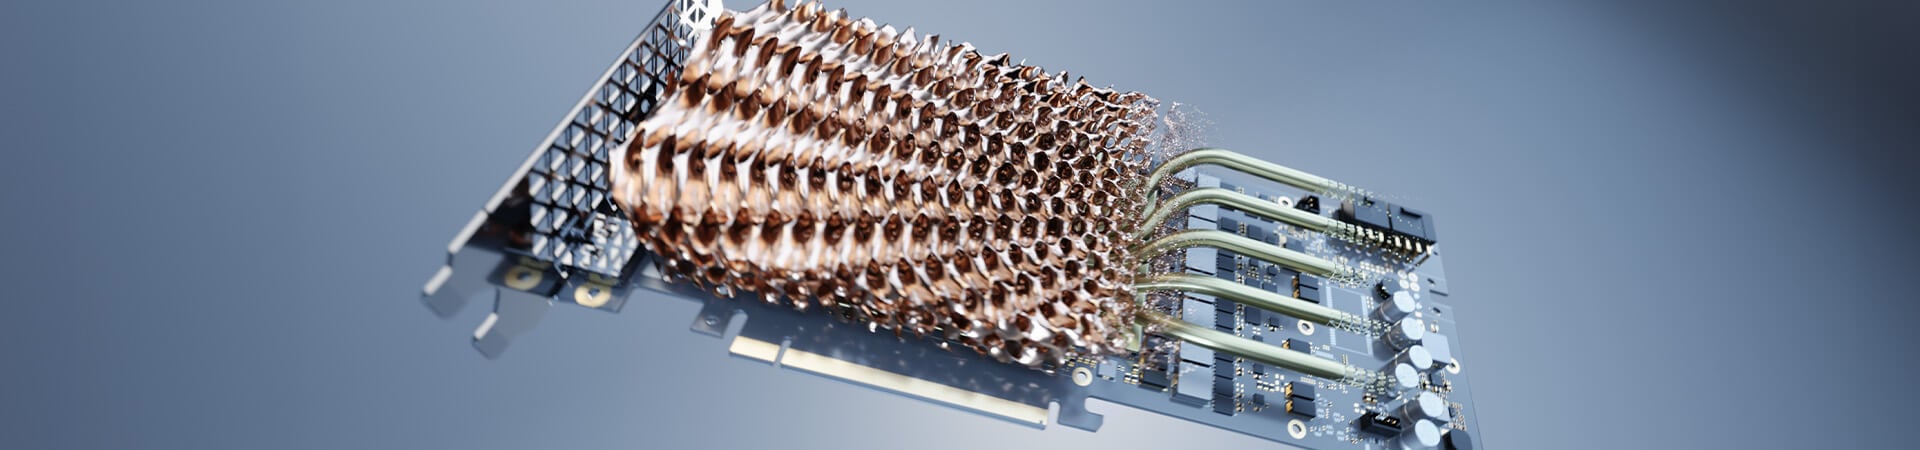 3D rendering of a GPU with lattice design.